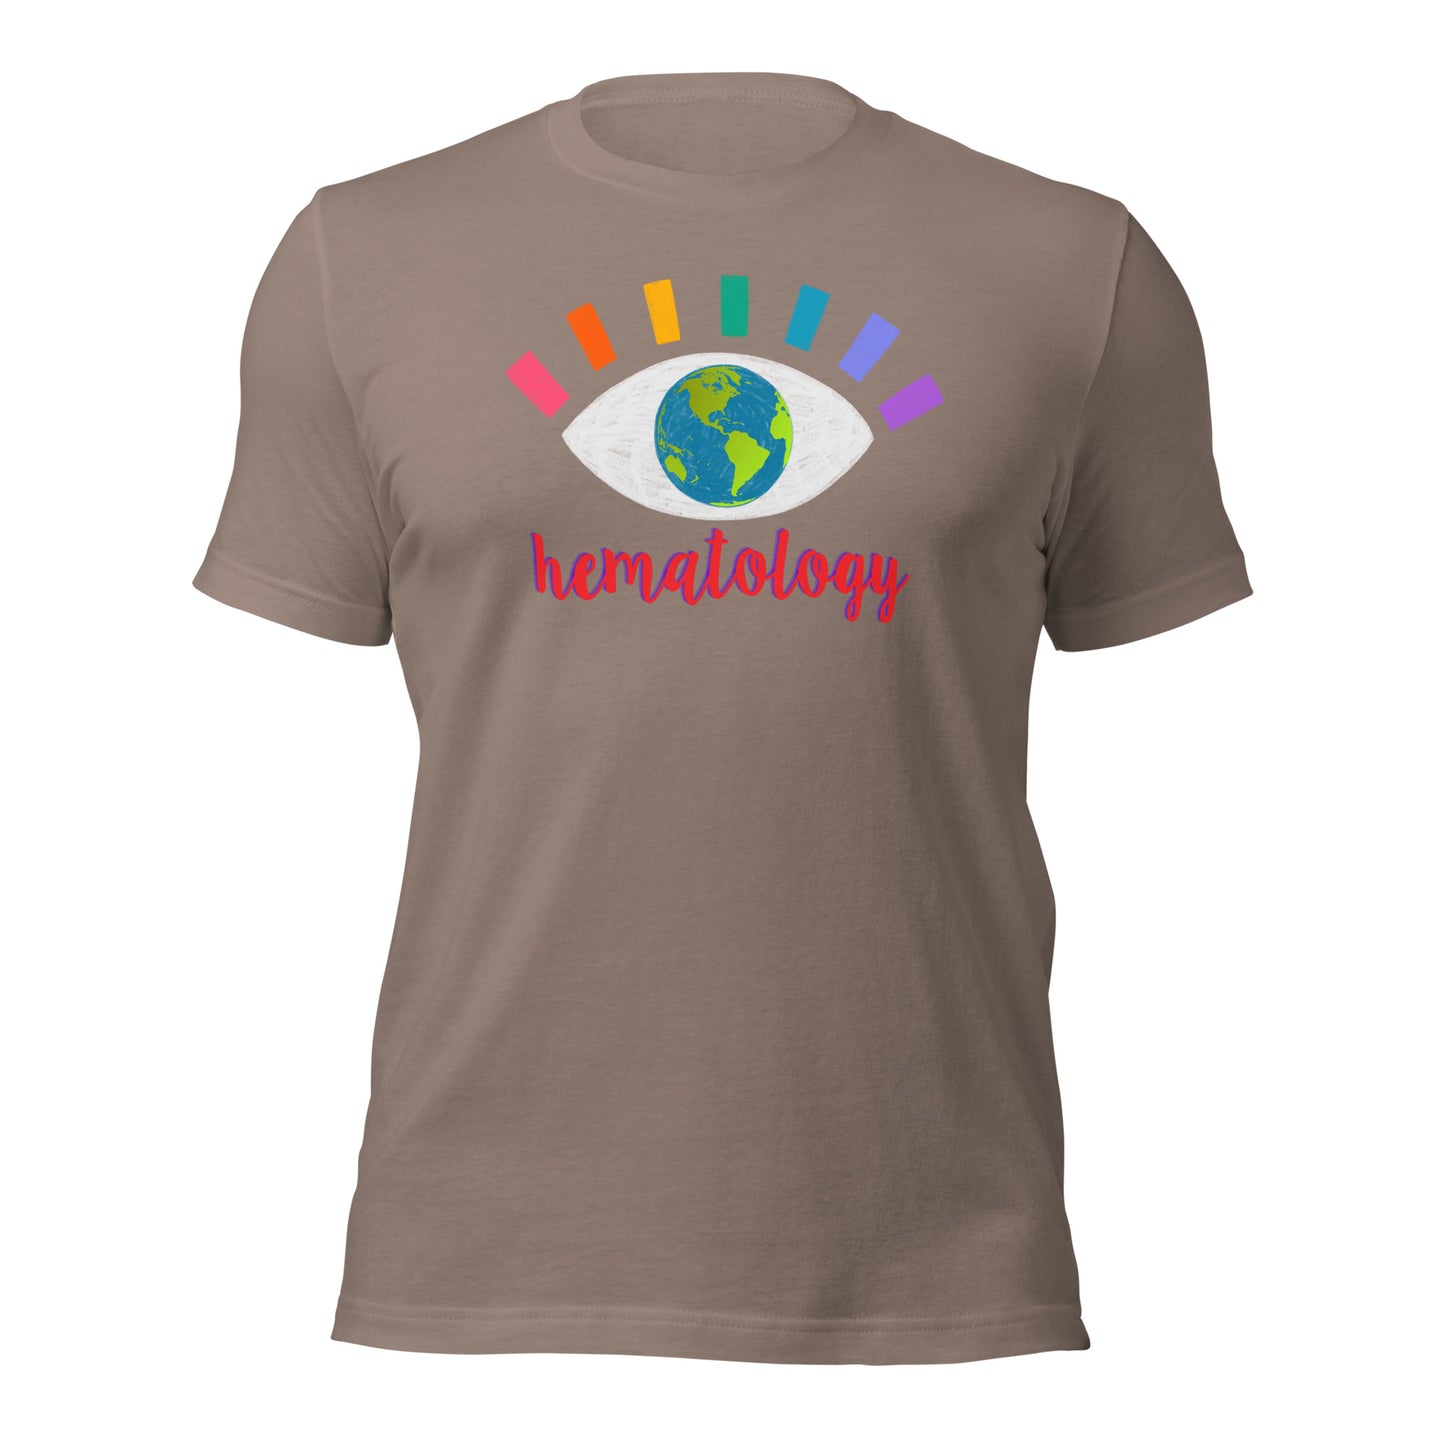 HEMATOLOGY Unisex t-shirt